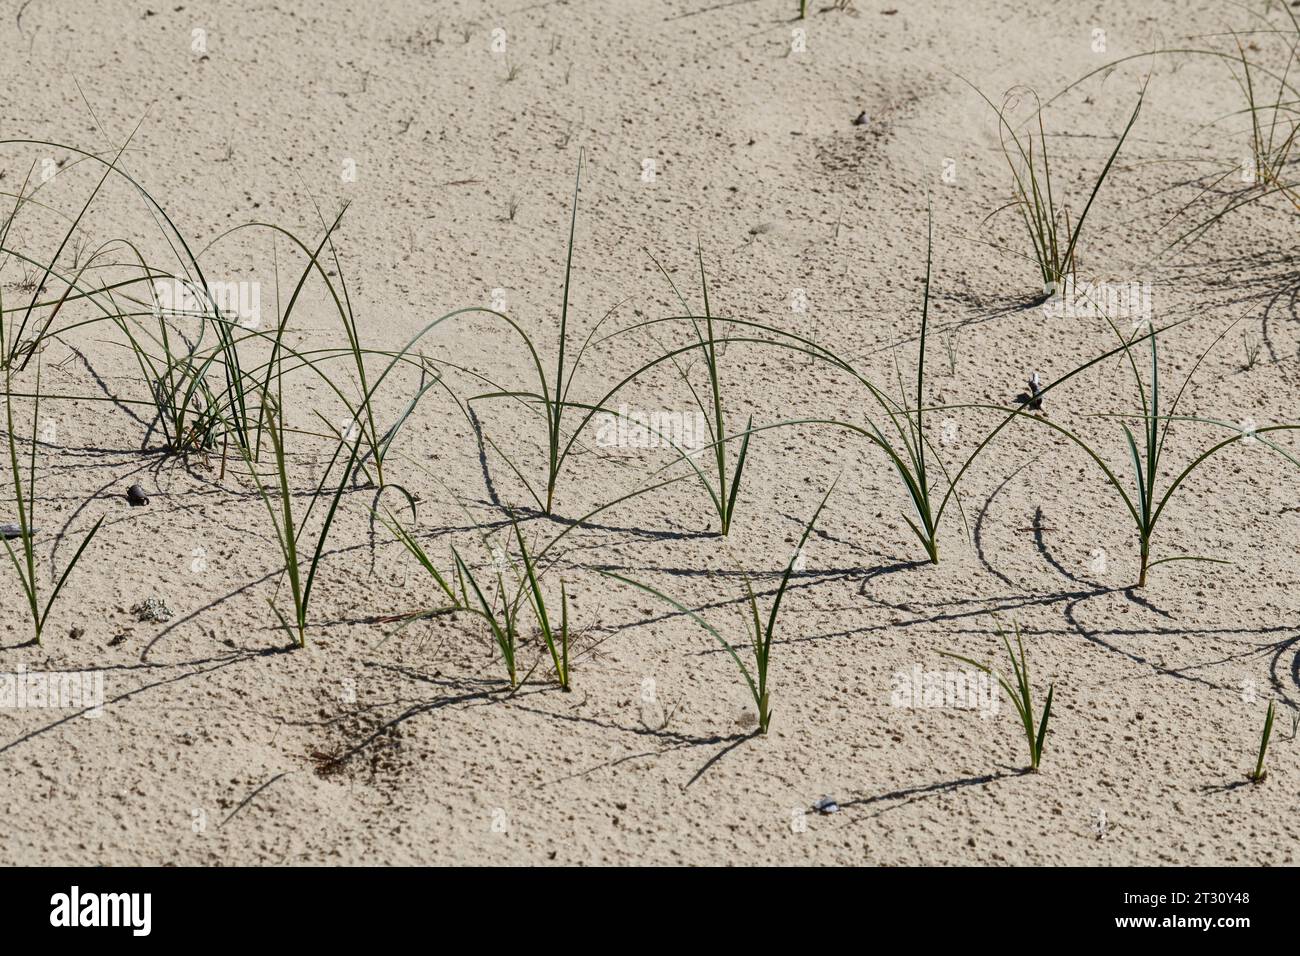 Sand-Segge, Sandsegge, Segge, Carex arenaria, Sand Sedge, La laîche des sables Stock Photo